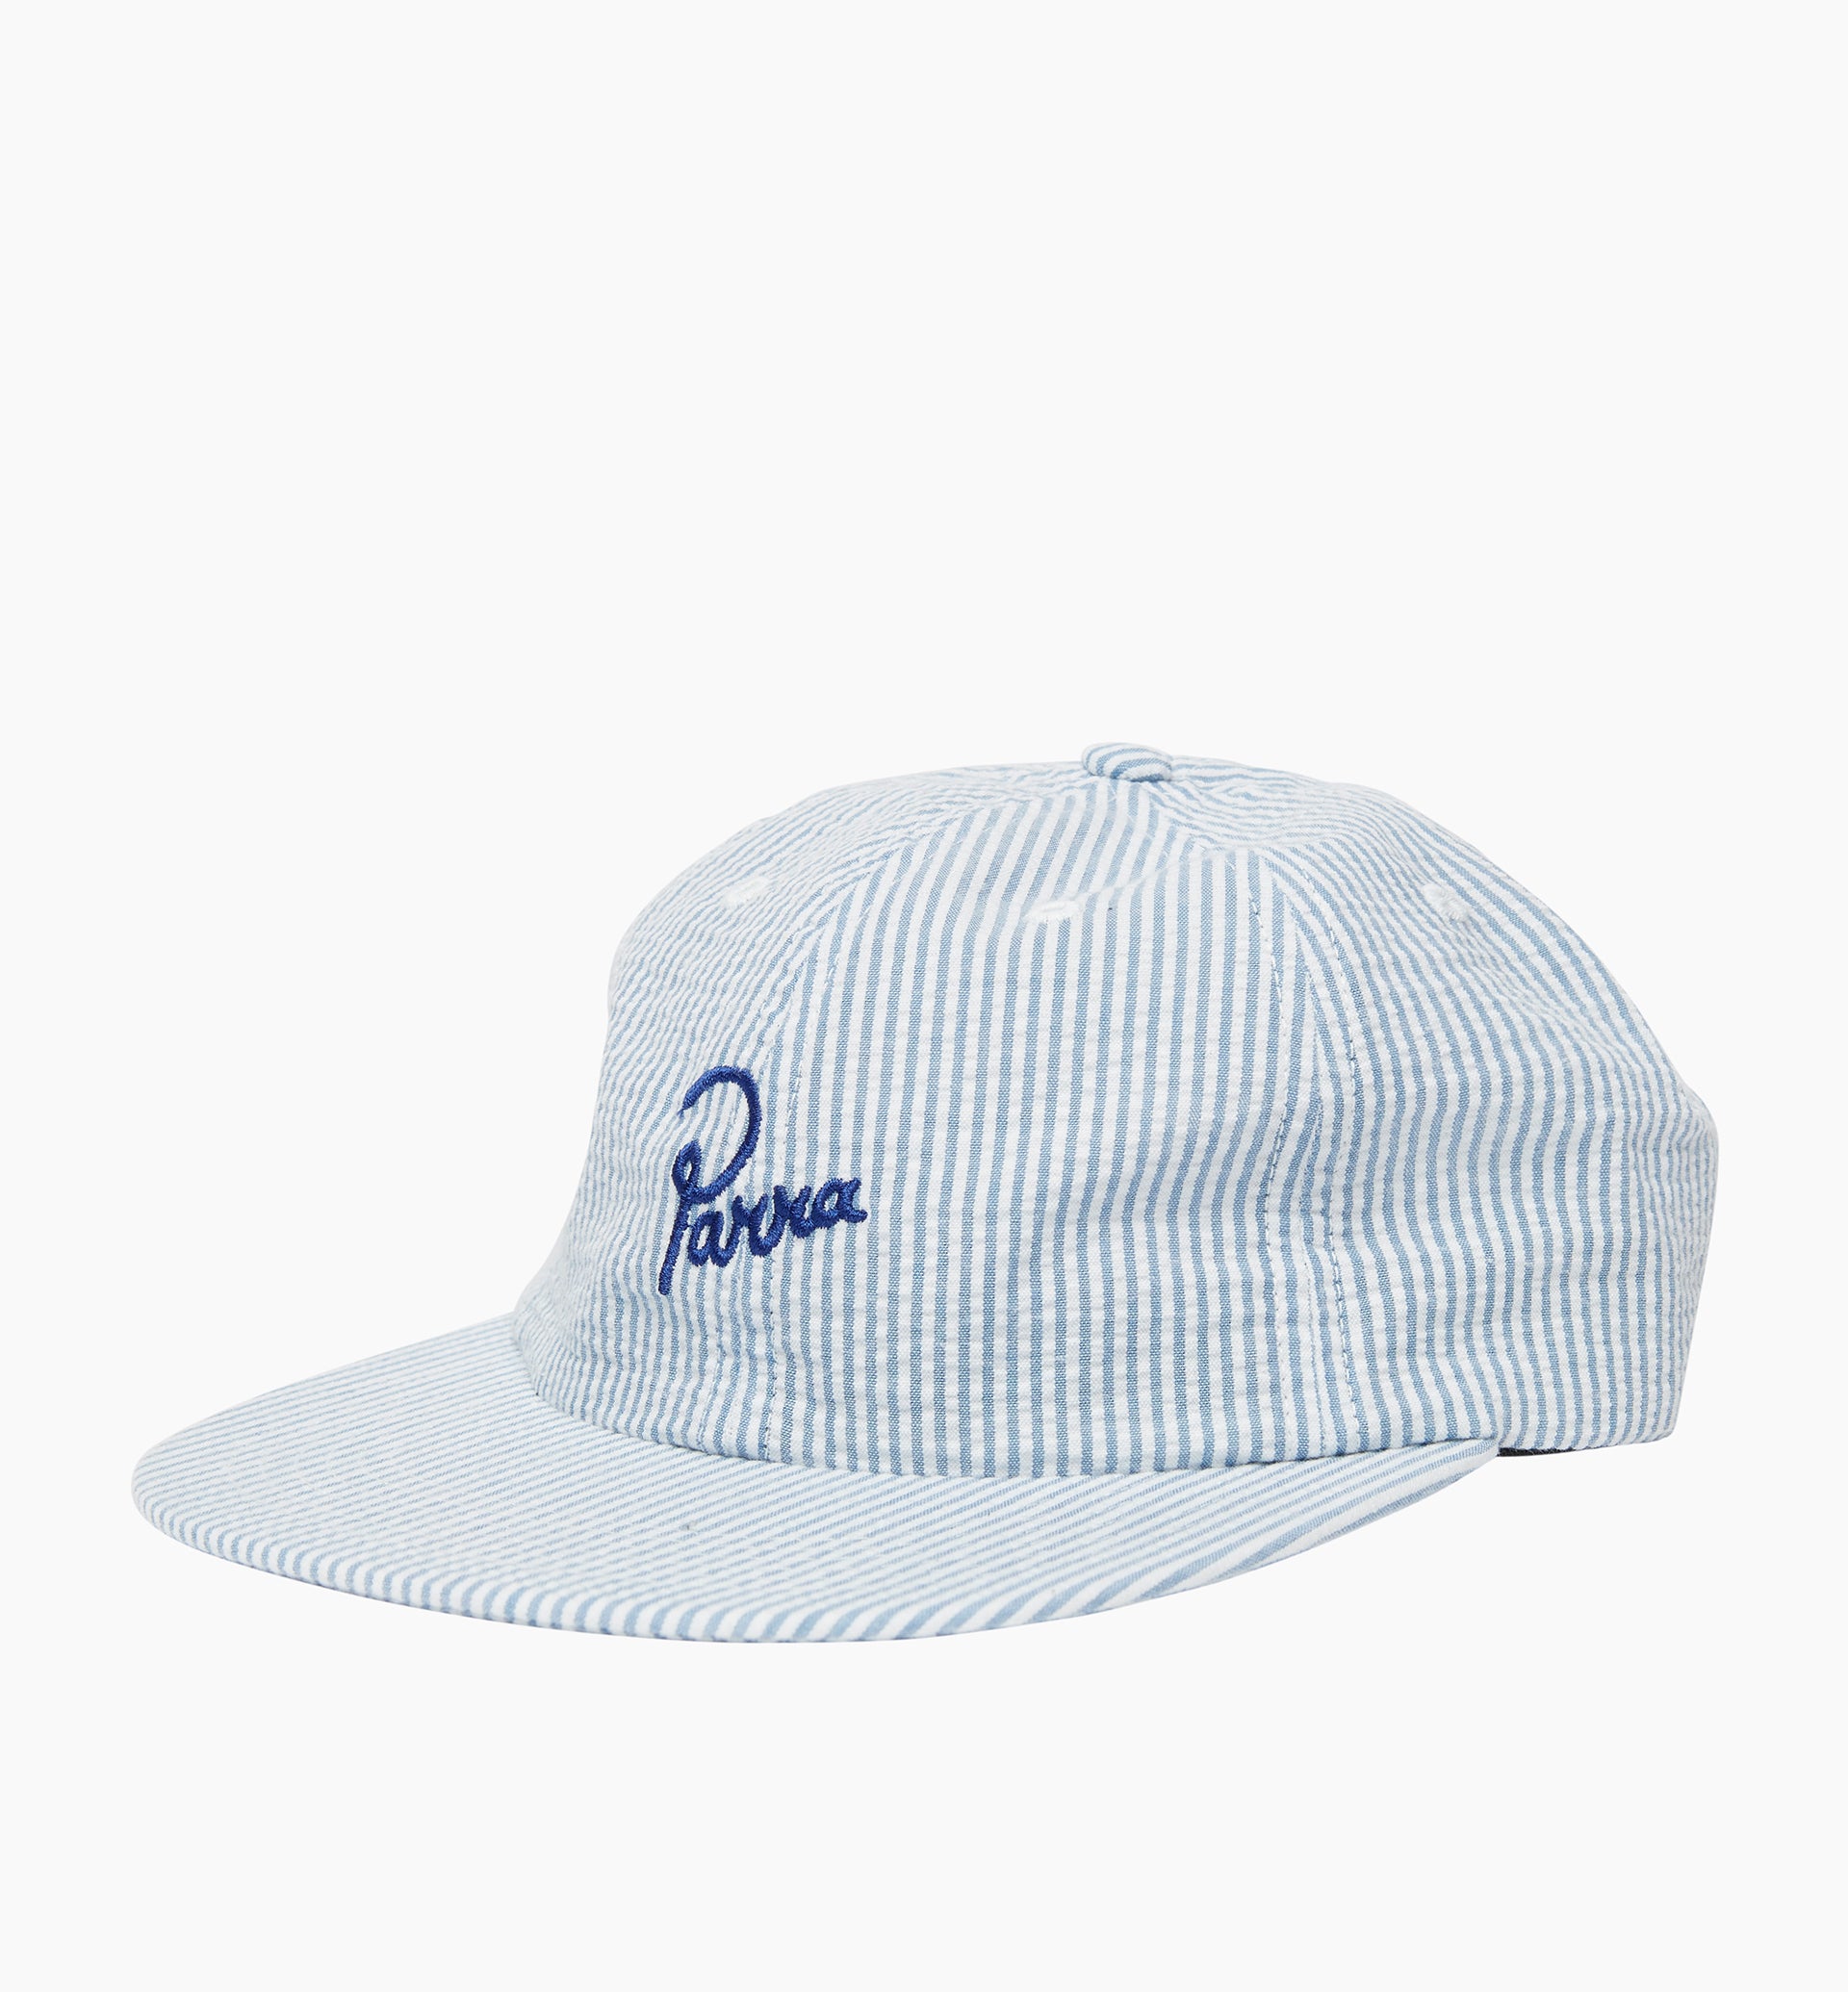 Parra - classic logo 6 panel hat